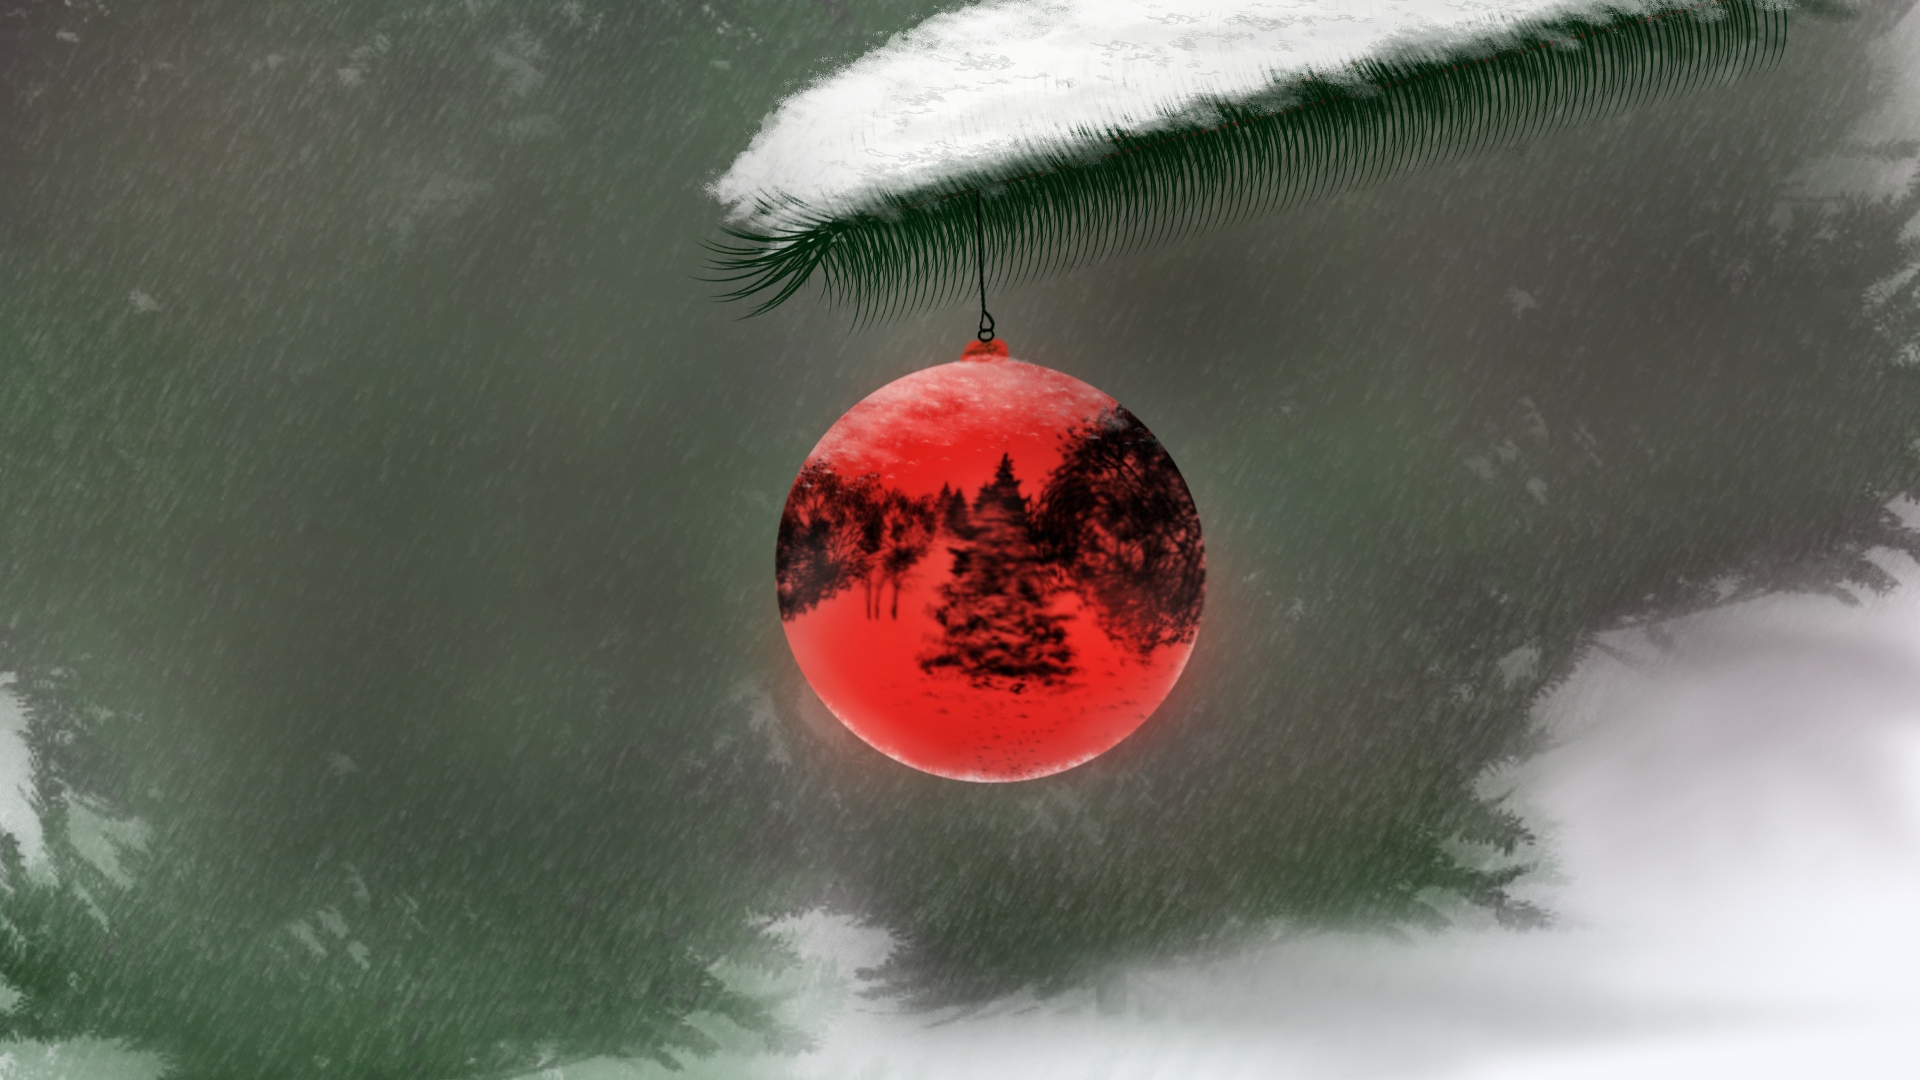 Digital Painting Digital Art Nature Christmas Christmas Ornaments Snow 1920x1080